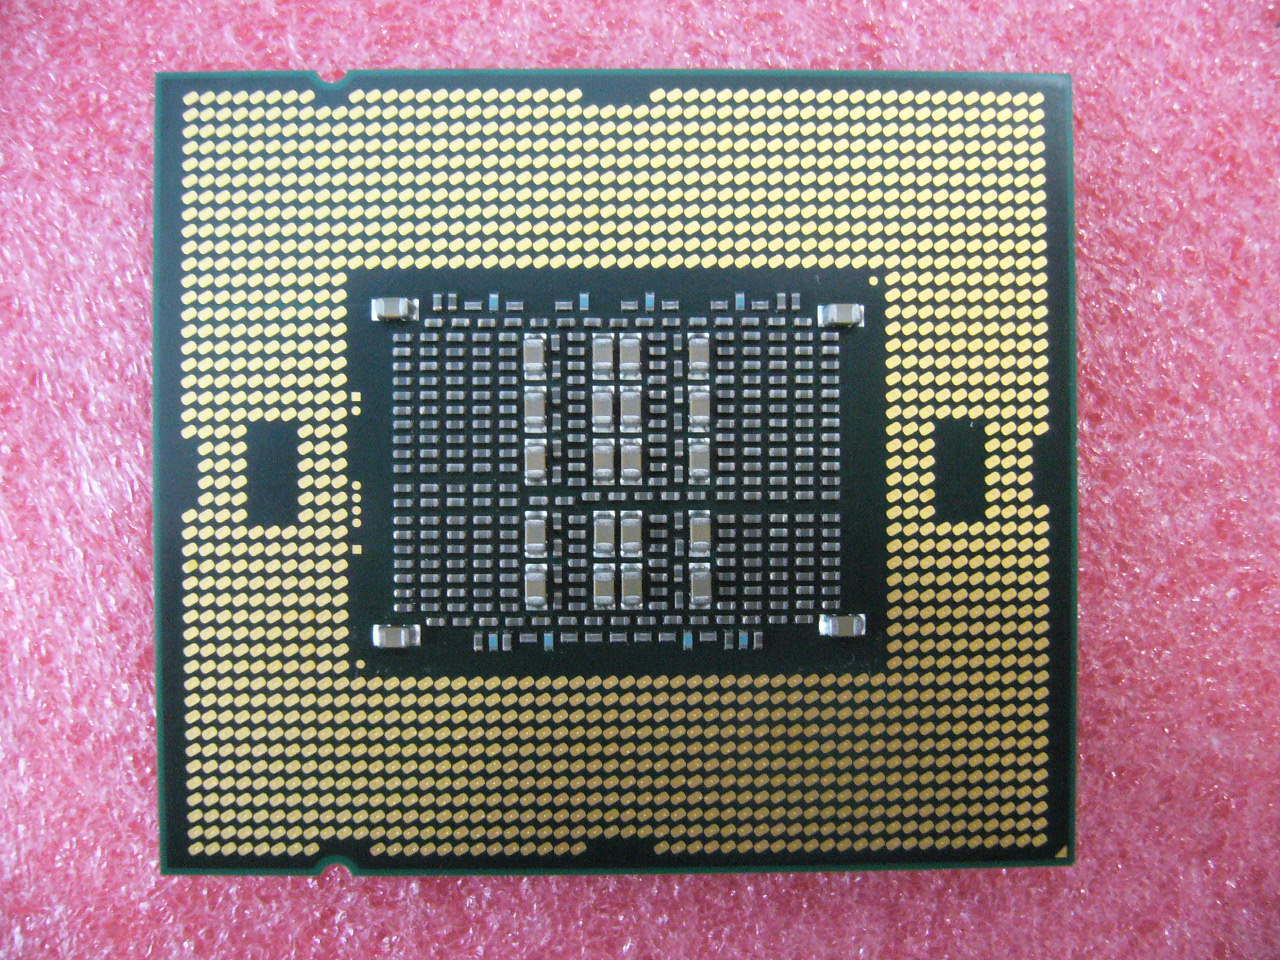 QTY 1x INTEL Eight-Cores CPU E7-4830 2.13GHZ/24MB 6.4GT/s QPI LGA1567 SLC3Q - Click Image to Close